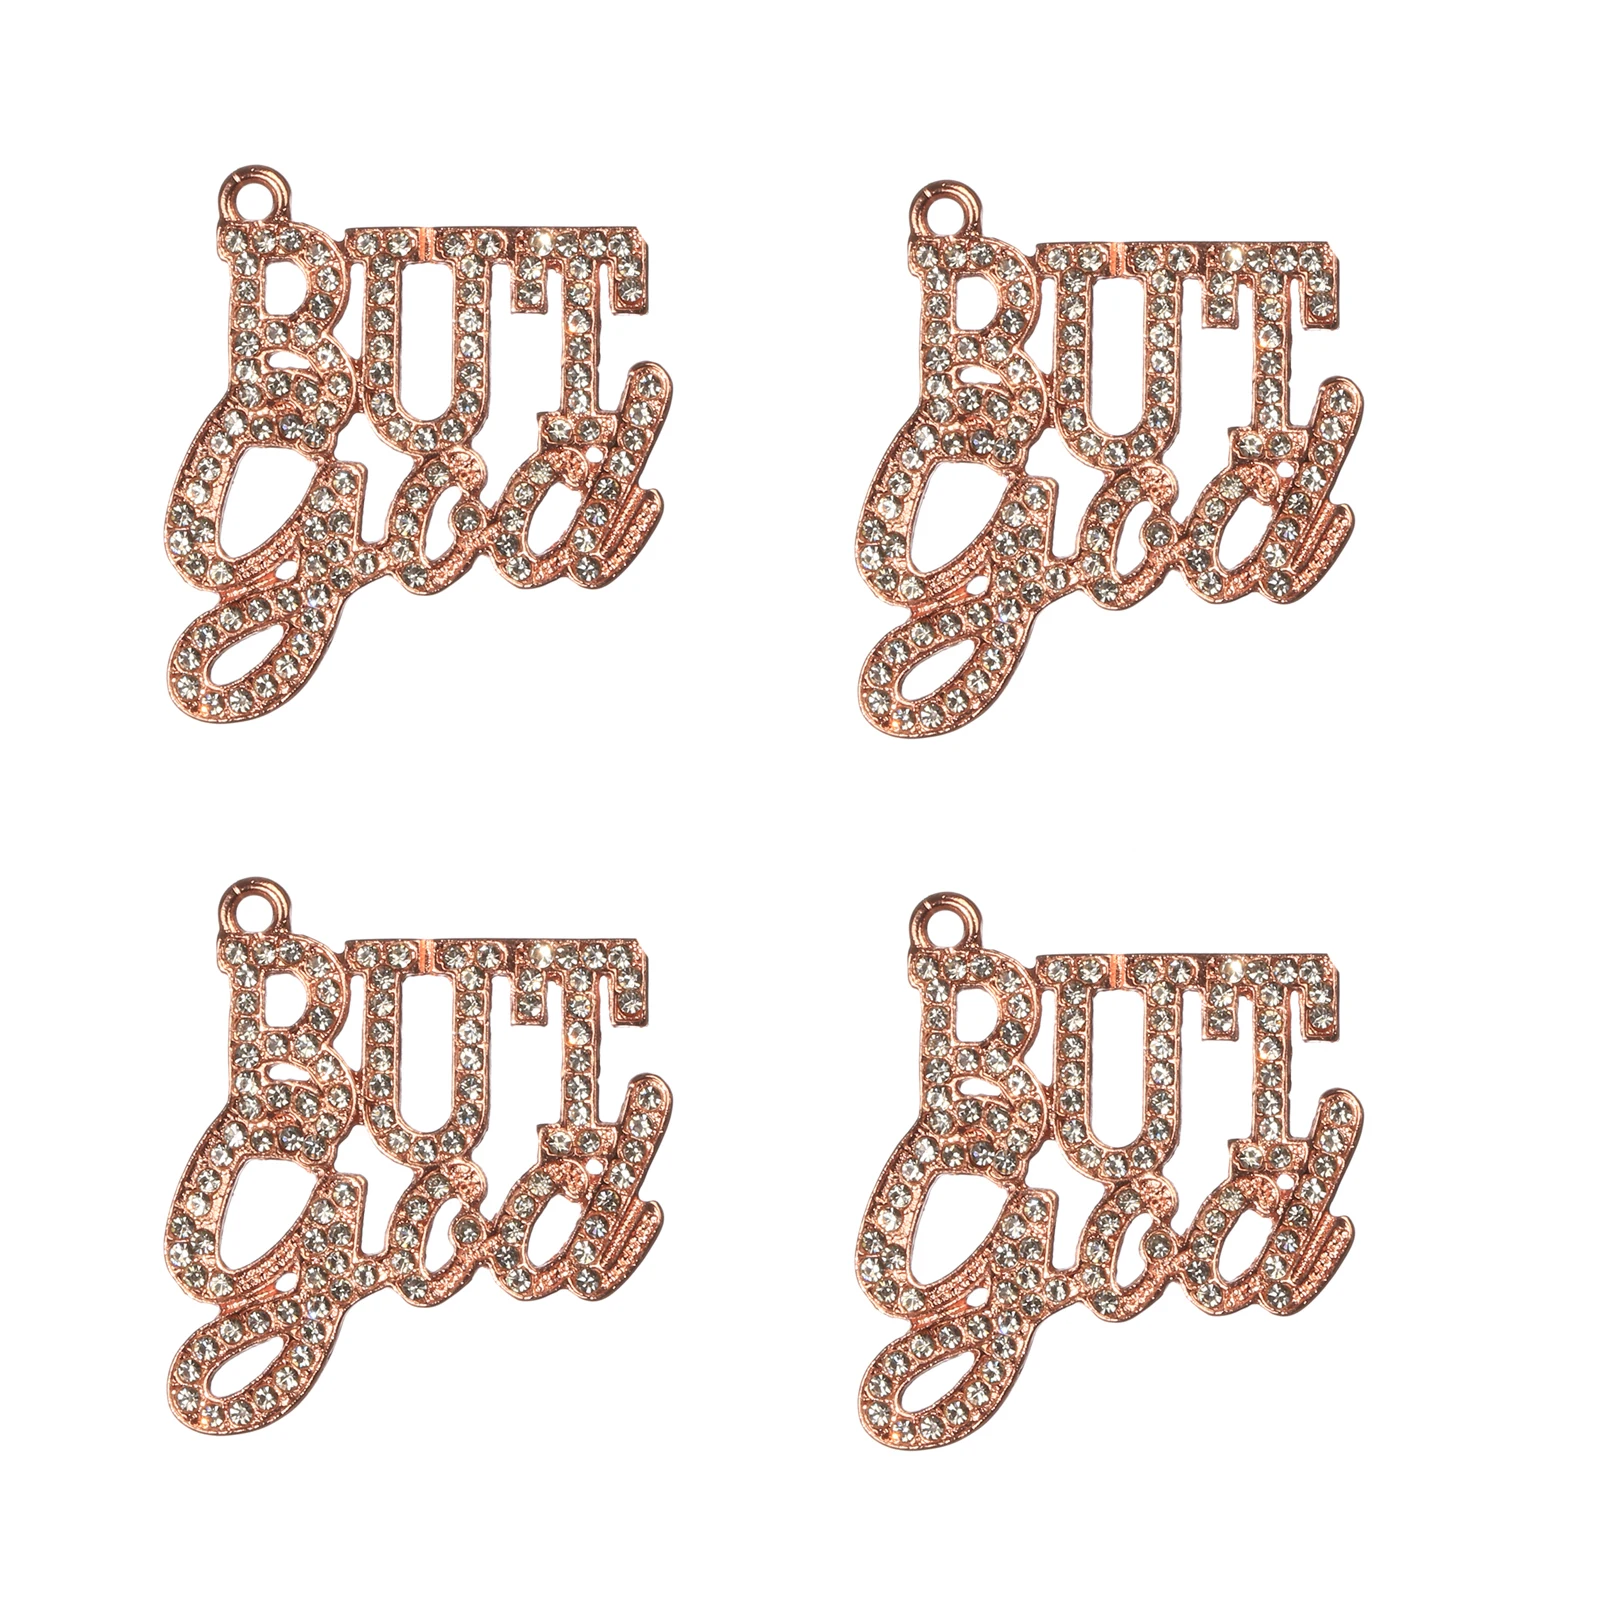 10pcs BUT God Rhinestone Letter Charms Fit for Bracelet DIY Jewelry Making LTC0369-LTC0372